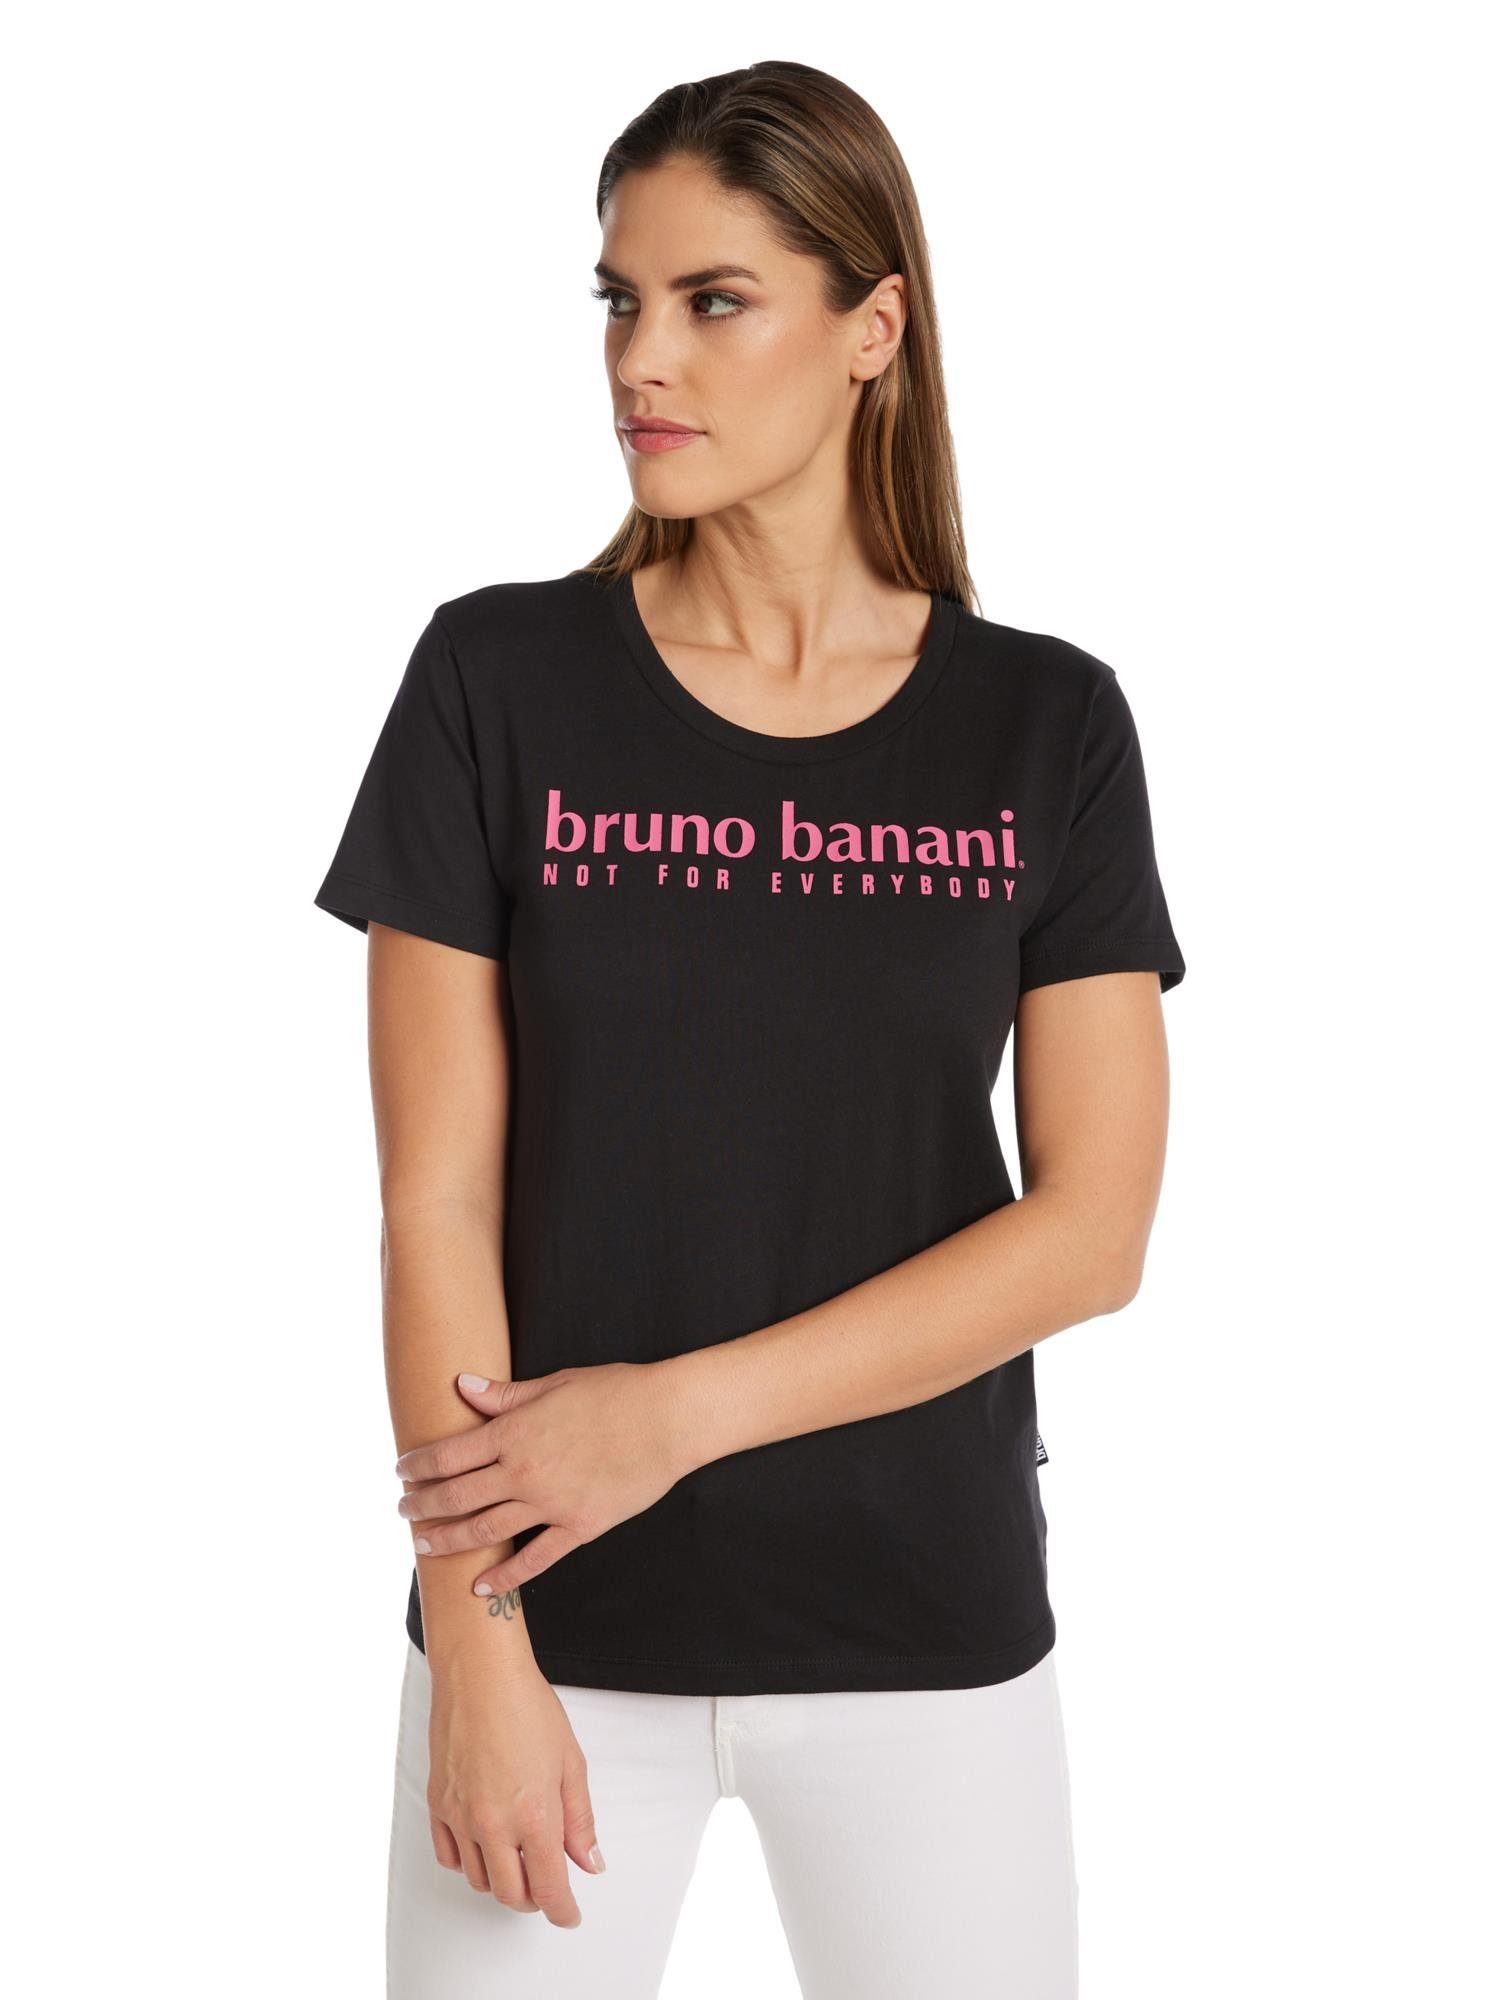 Bruno Banani T-Shirt Avery Schwarz